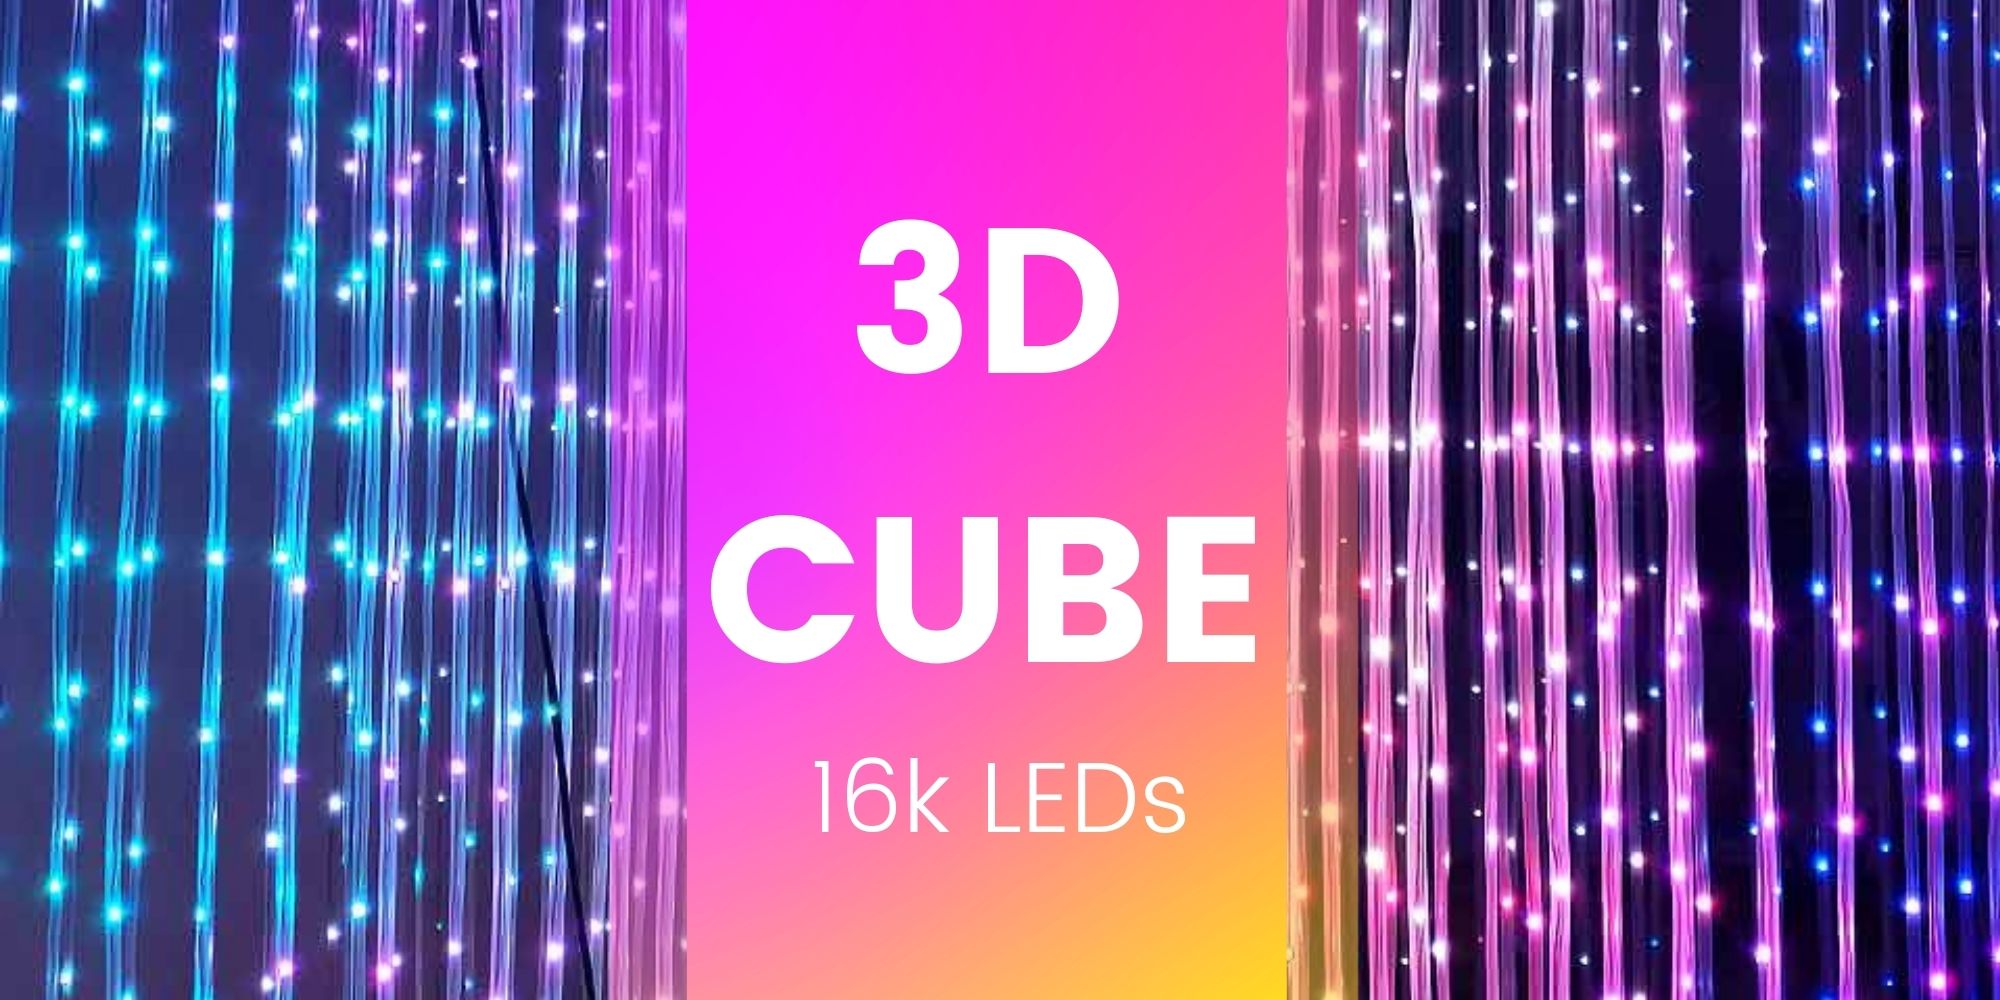 High-density Smart 3D LED Cube with 16k LEDs - by ETERESHOP